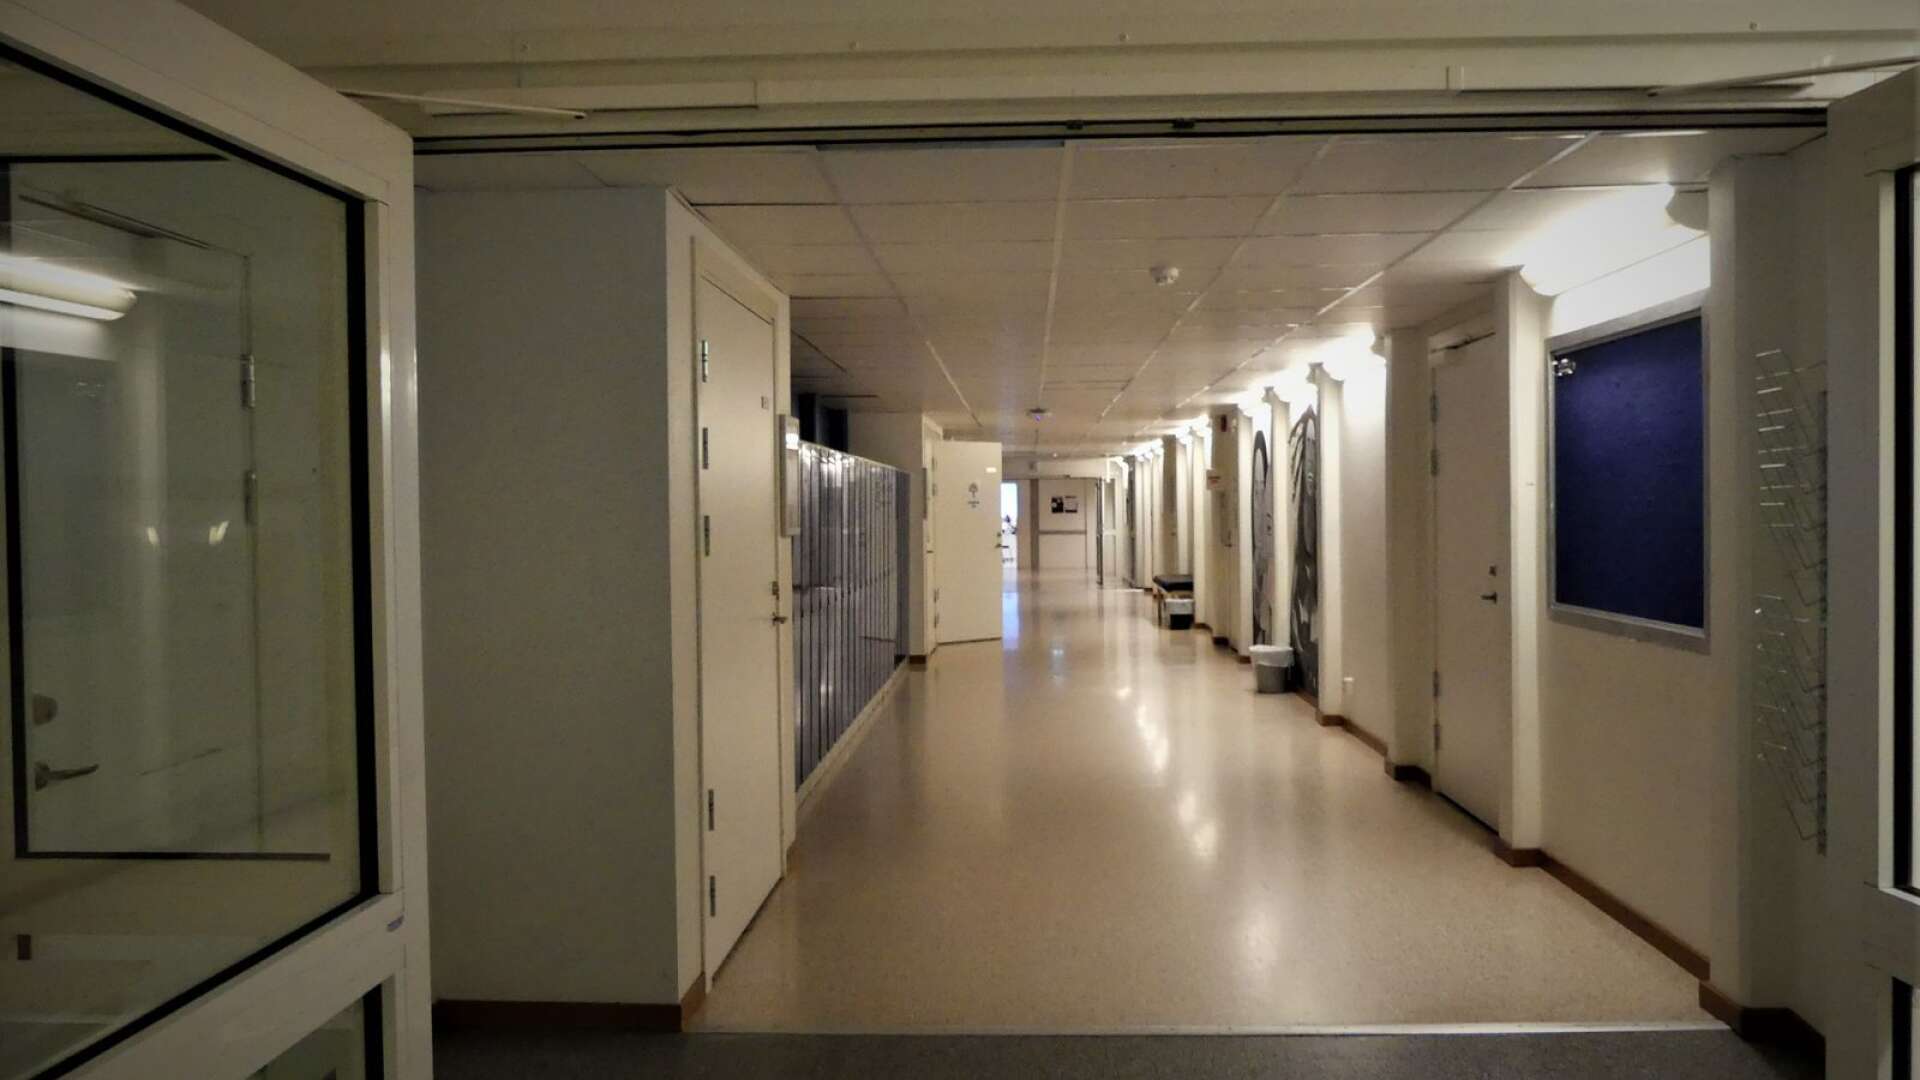 Det var ovanligt tomt i Karlbergsgymnasiets korridorer under tisdagen.